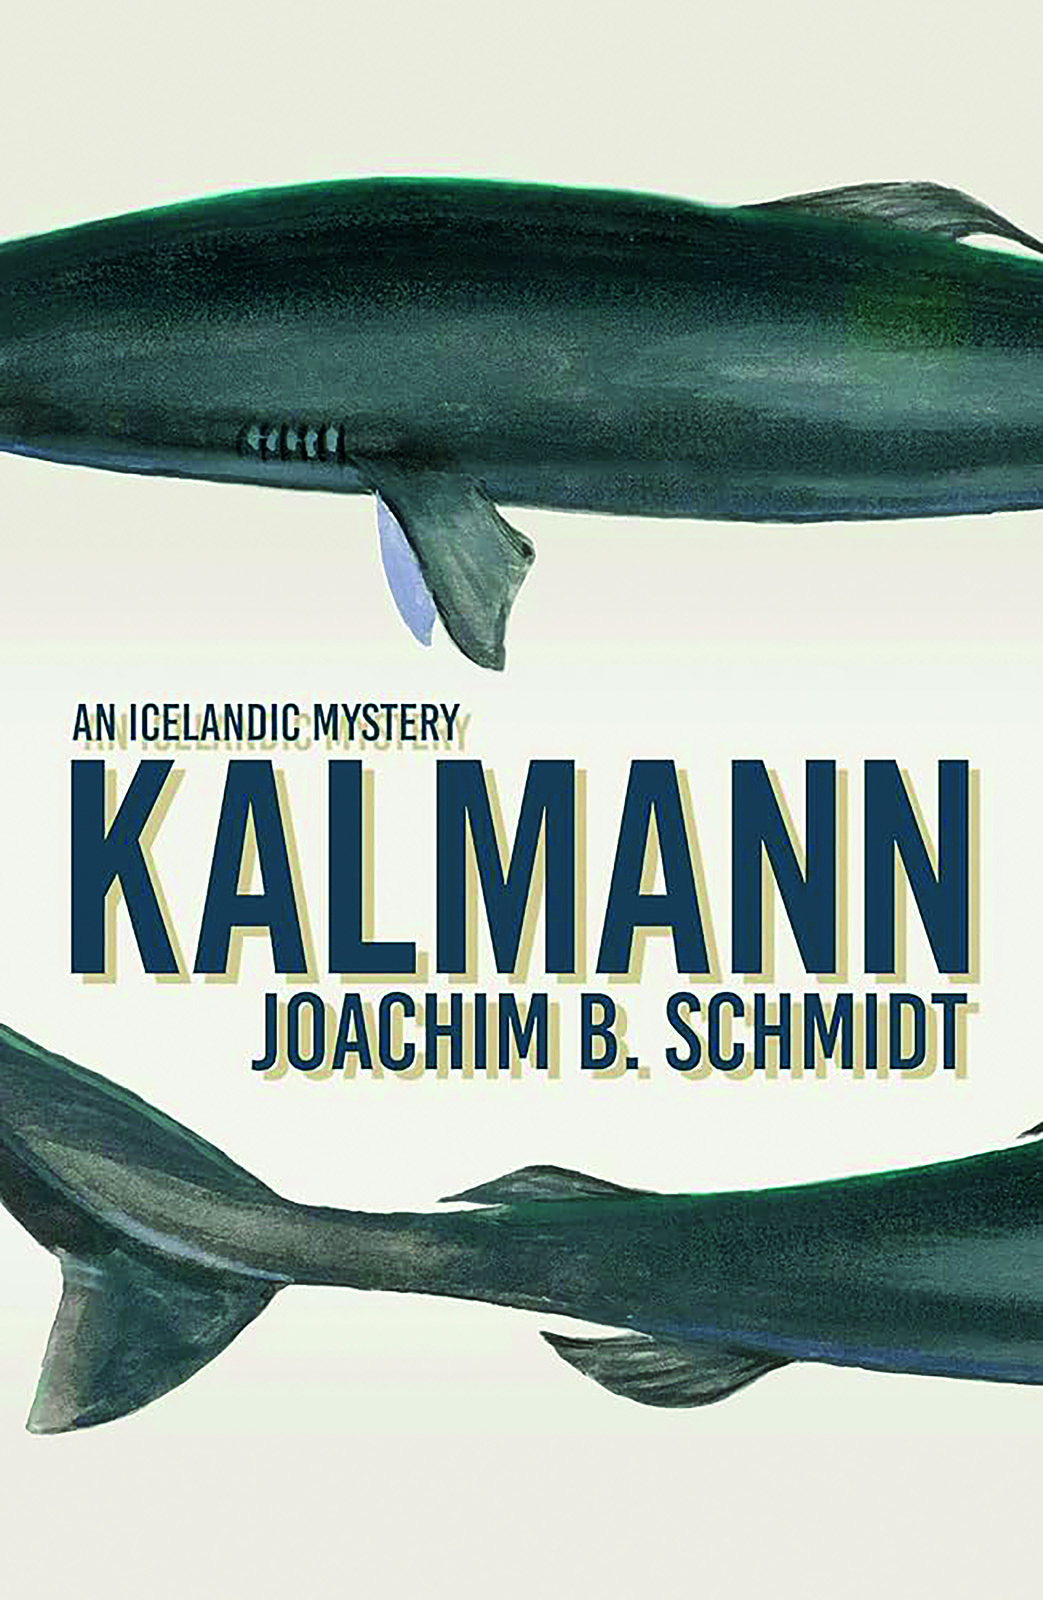 Kalmann – an Icelandic Mystery, Joachim B. Schmidt